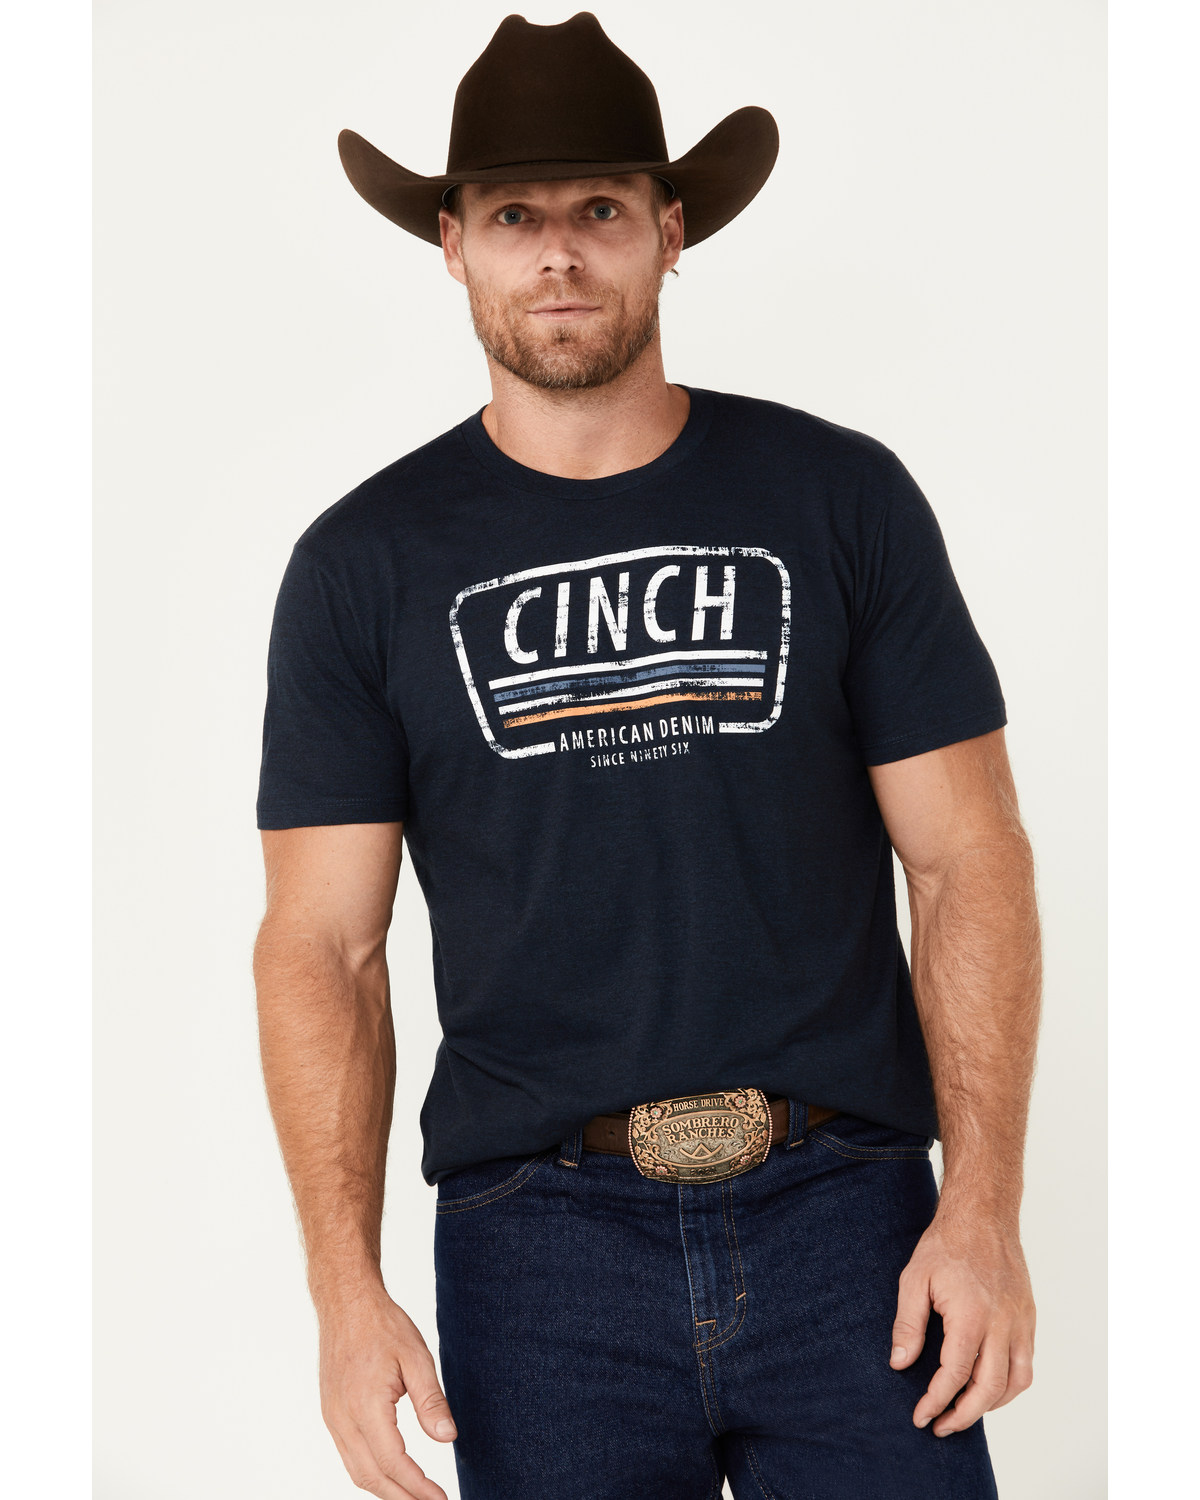 Cinch Men's American Denim License Plate Logo Short Sleeve Graphic T-Shirt